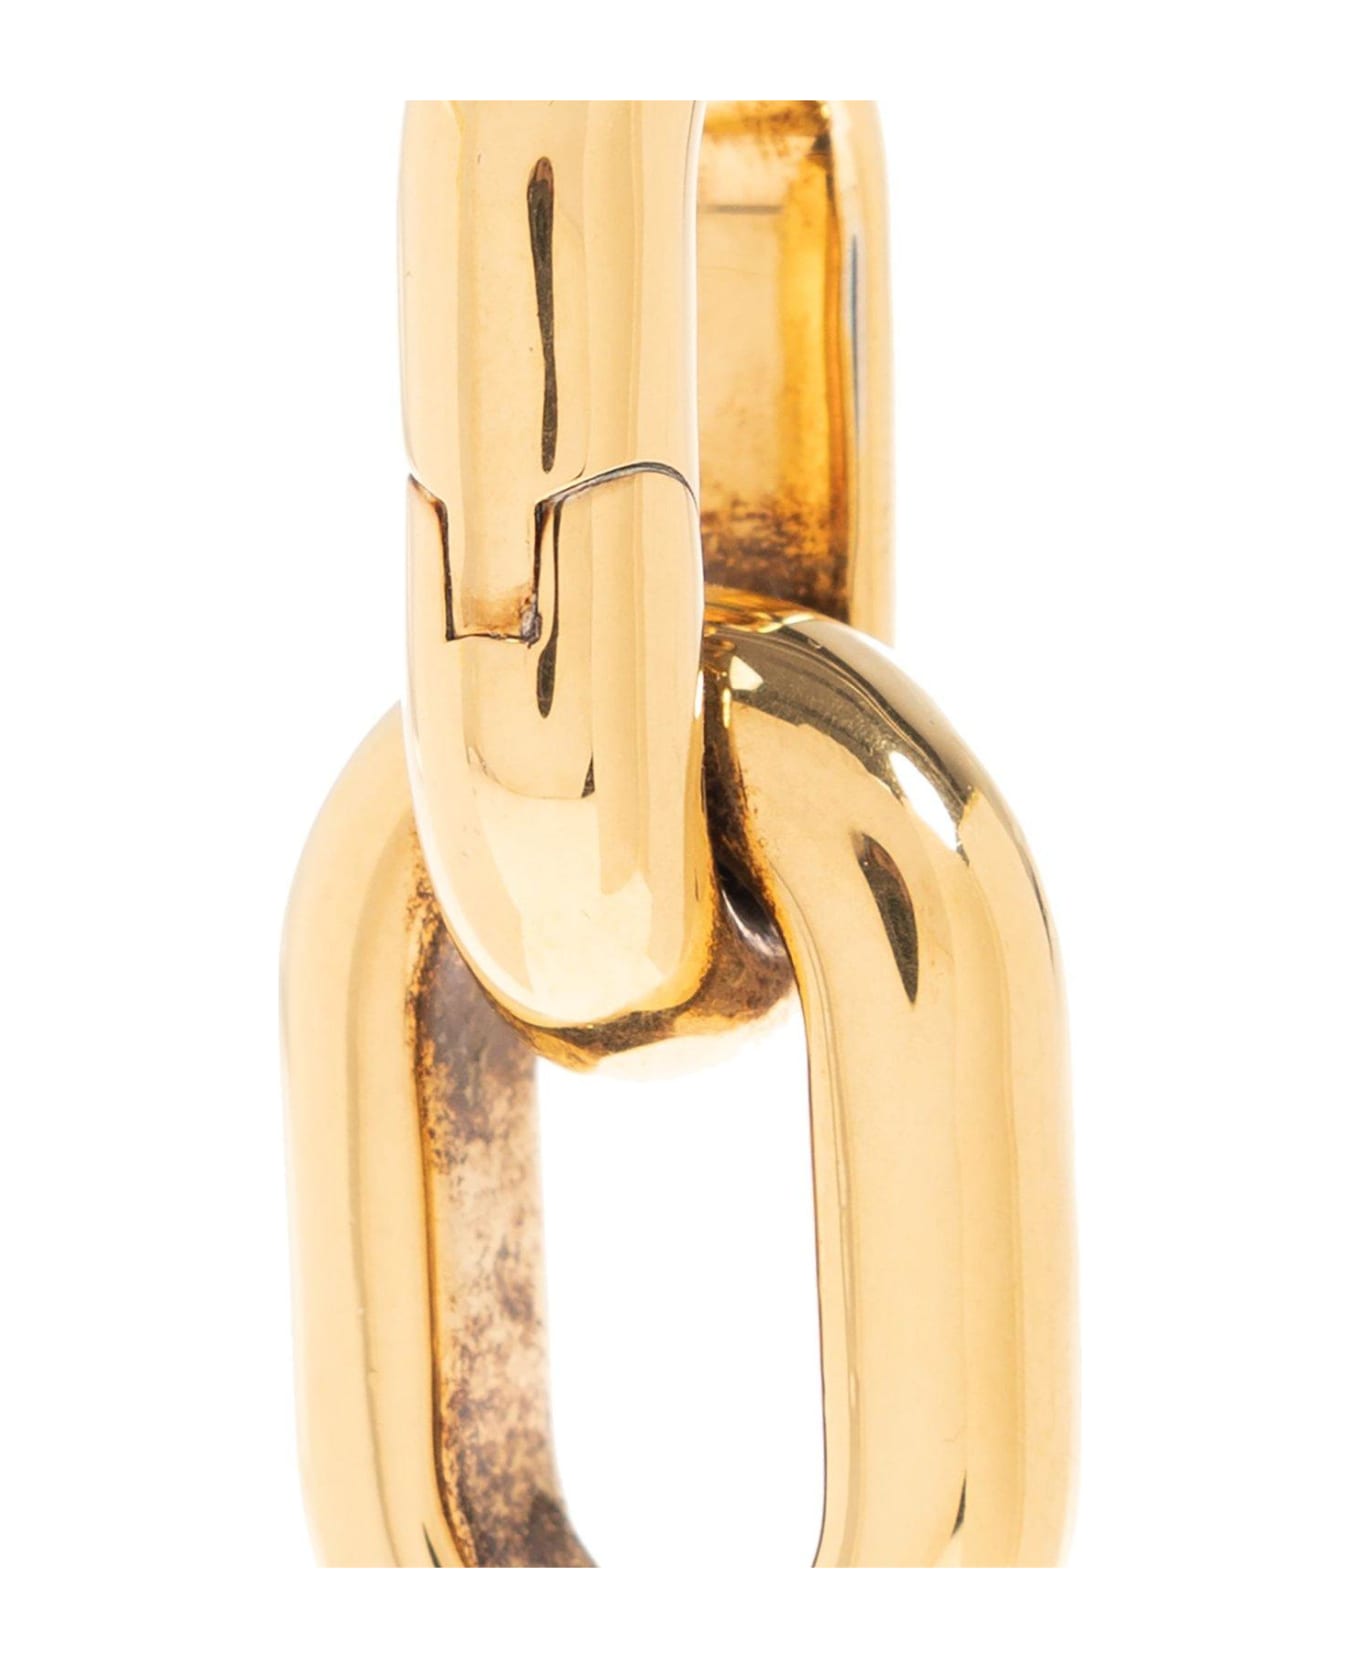 Alexander McQueen Peak Chain Logo Engraved Earrings - GOLD イヤリング